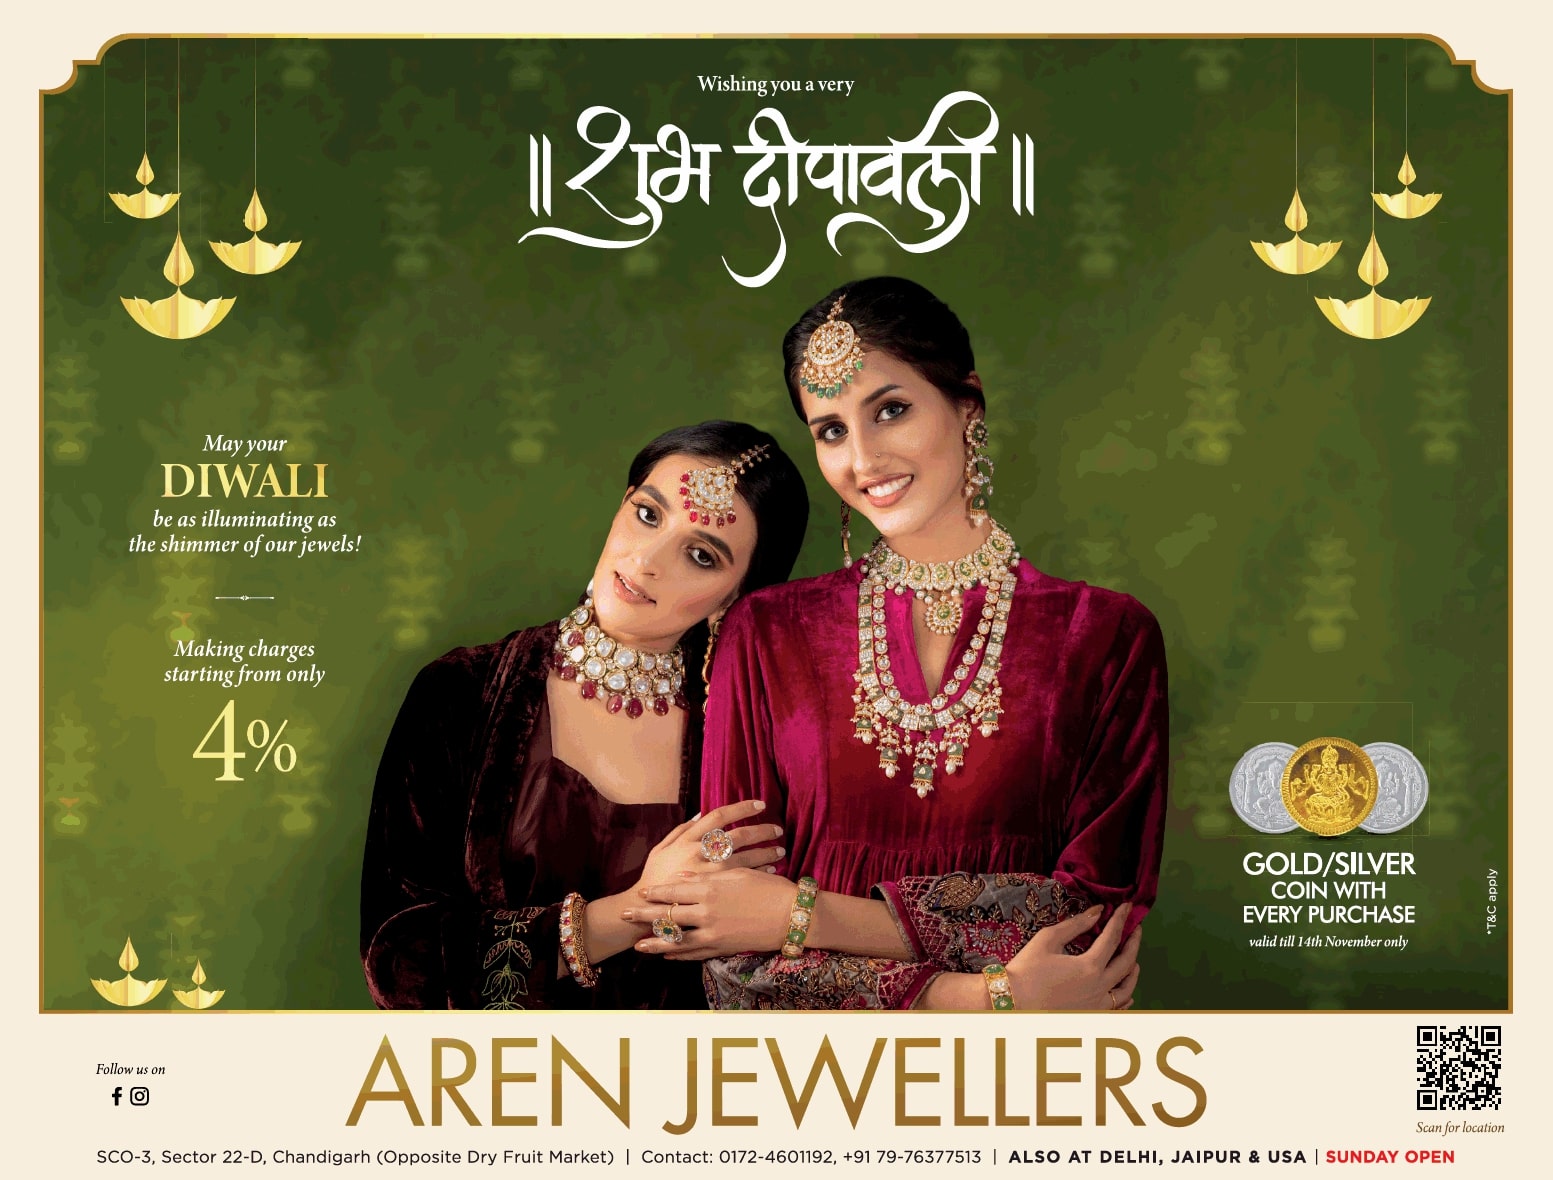 aren-jewellers-wishing-you-a-very-shubh-deepawali-ad-toi-chandigarh-14-11-2020